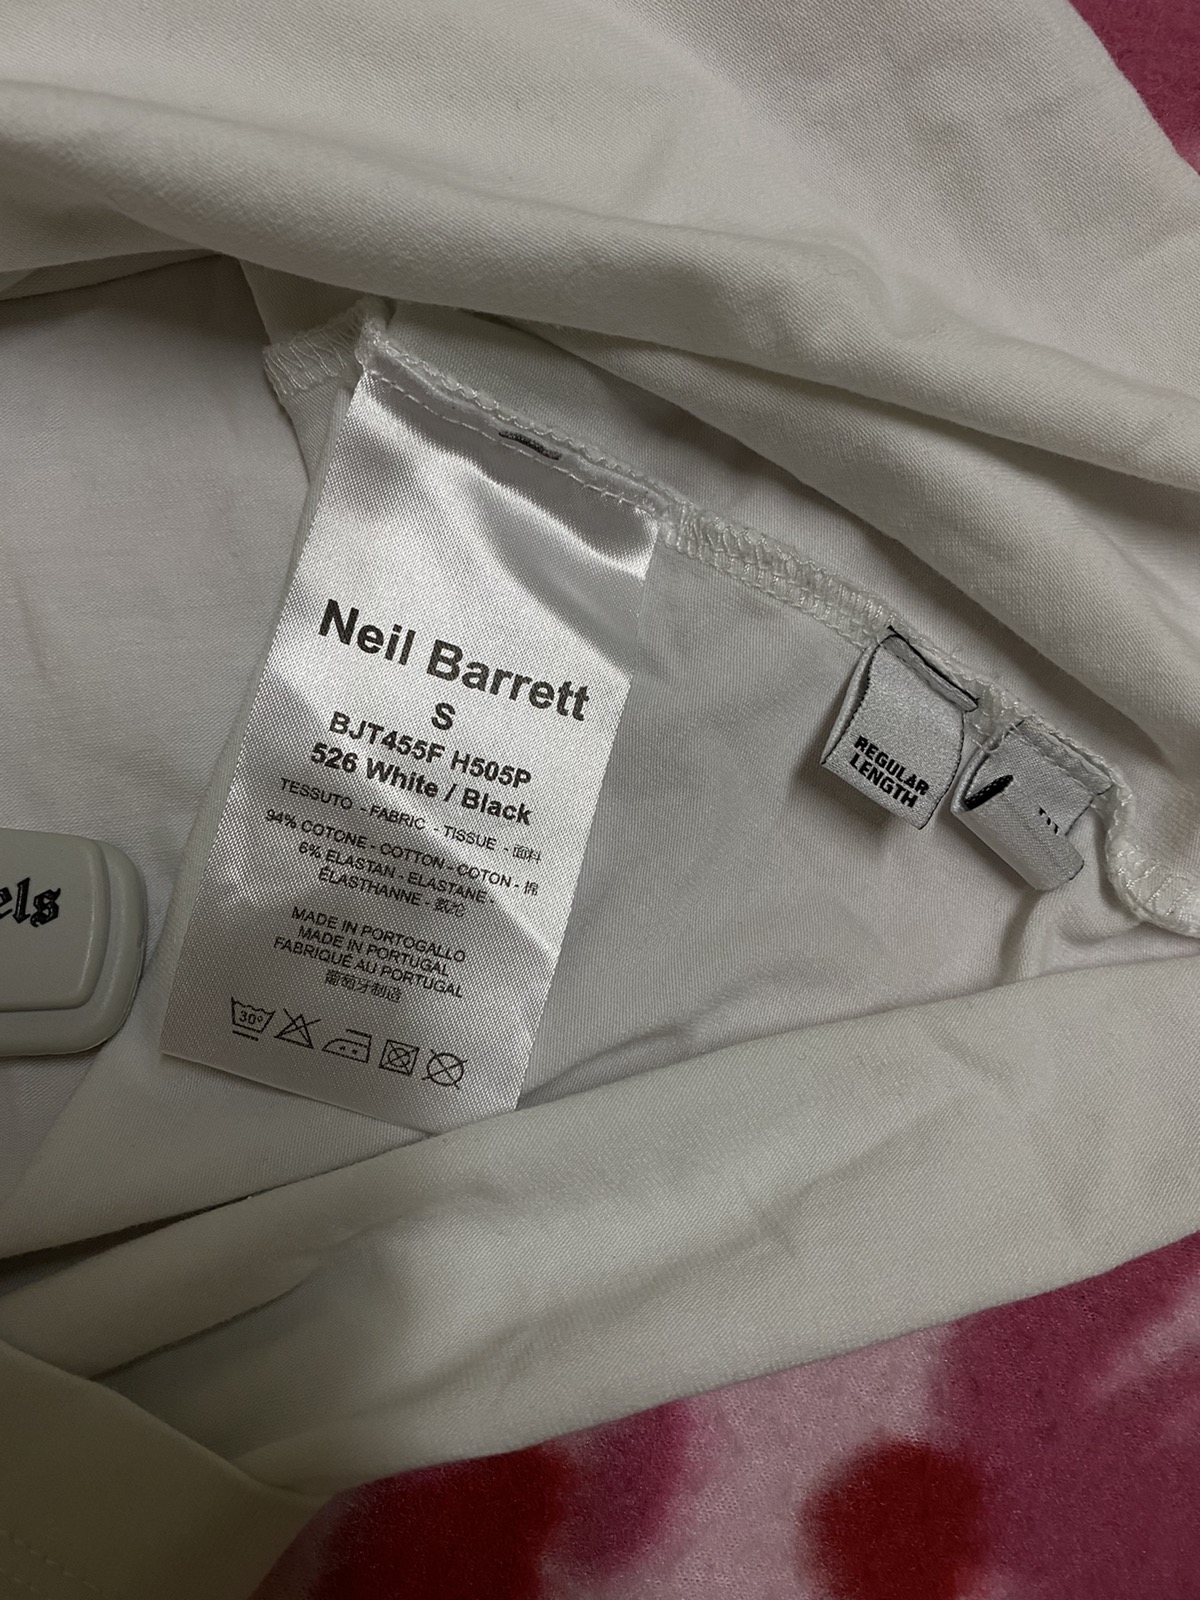 Neil Barrett Leather Texture Electric Tee T-shirt - 4